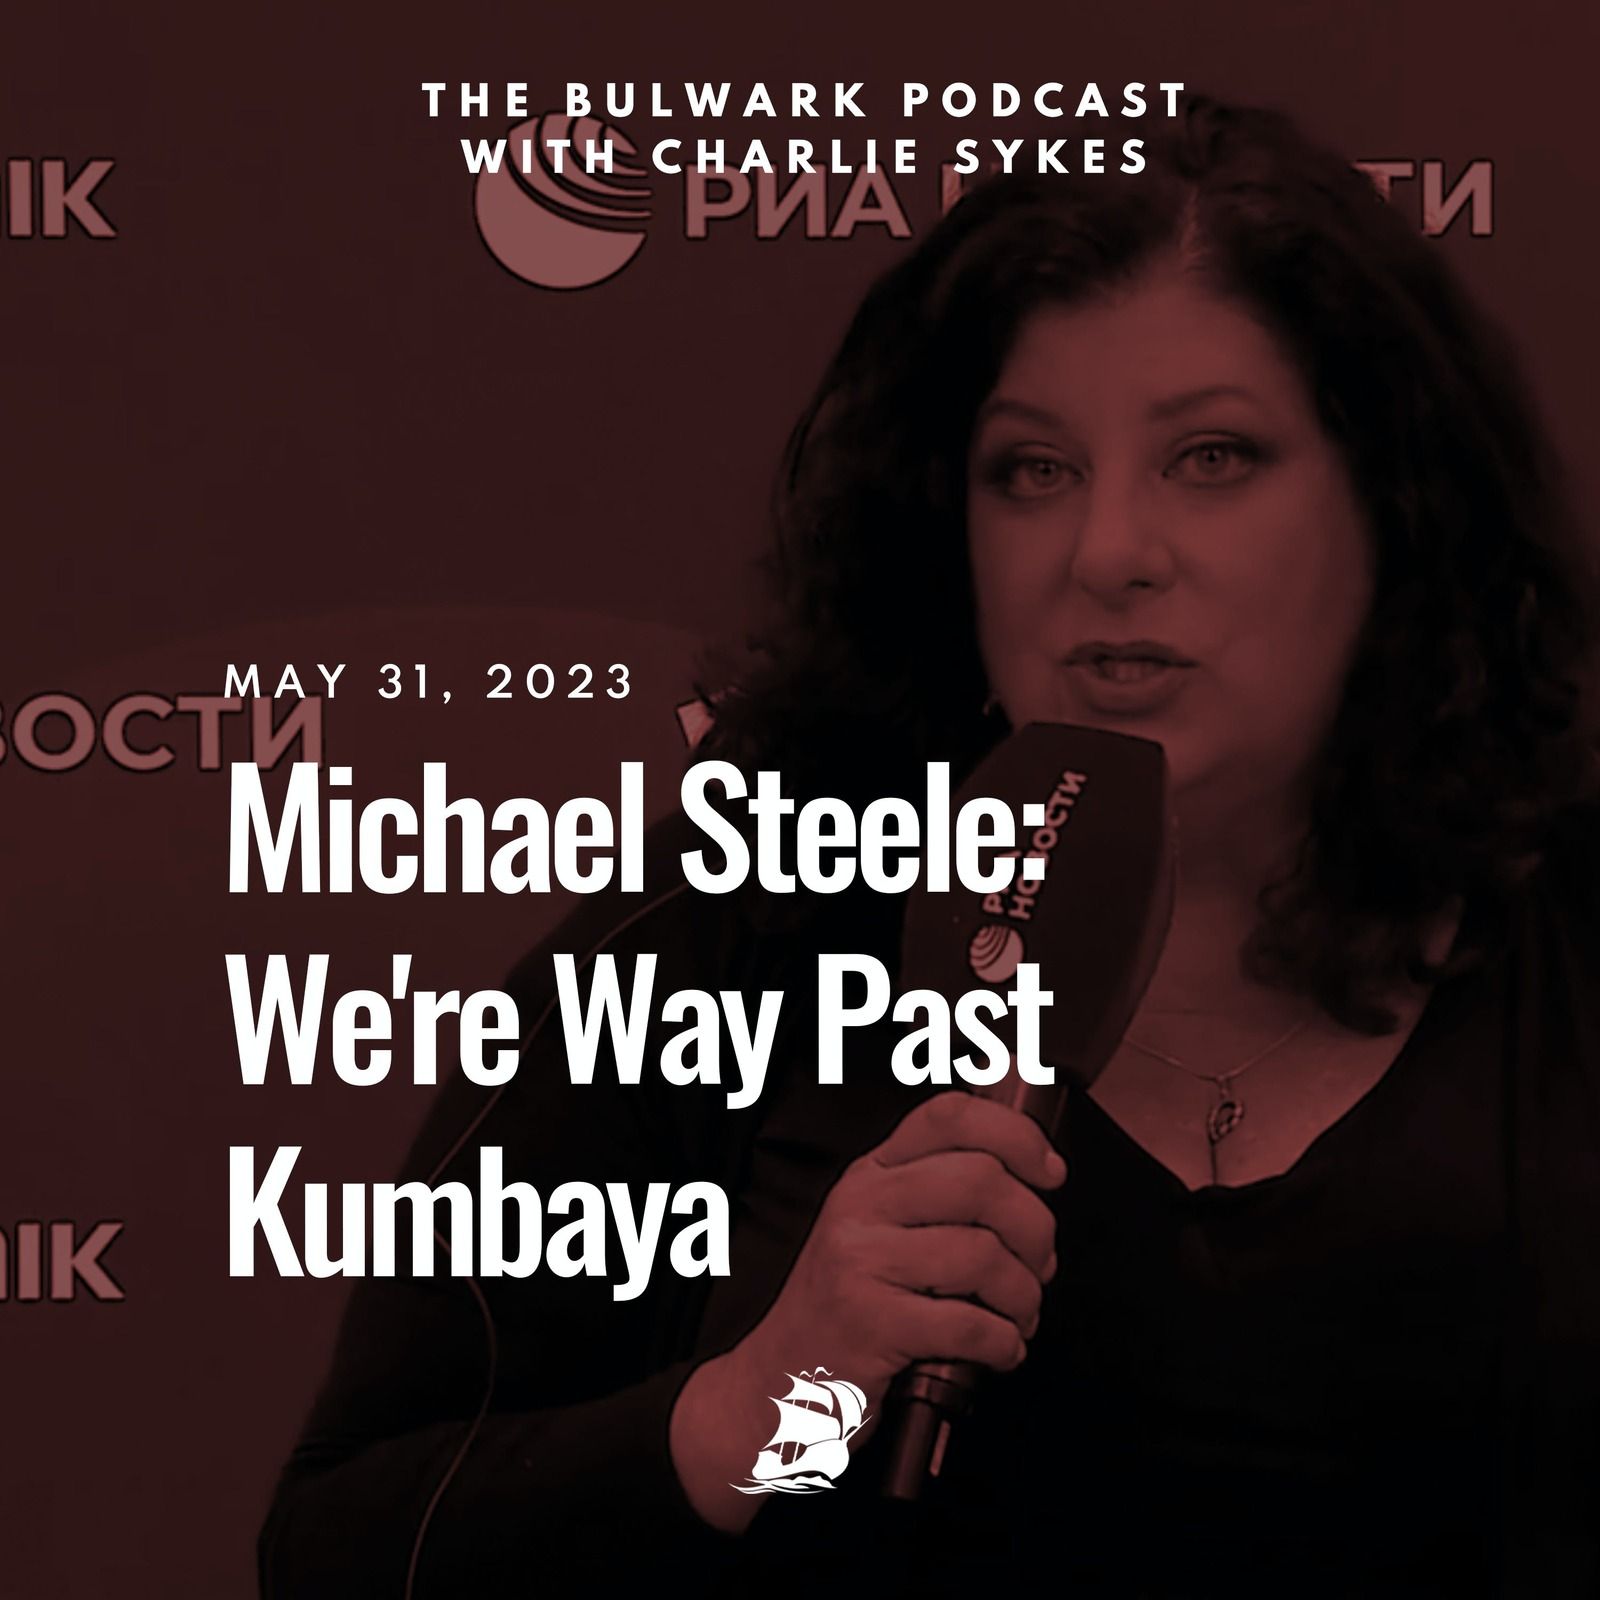 Michael Steele: We're Way Past Kumbaya by The Bulwark Podcast